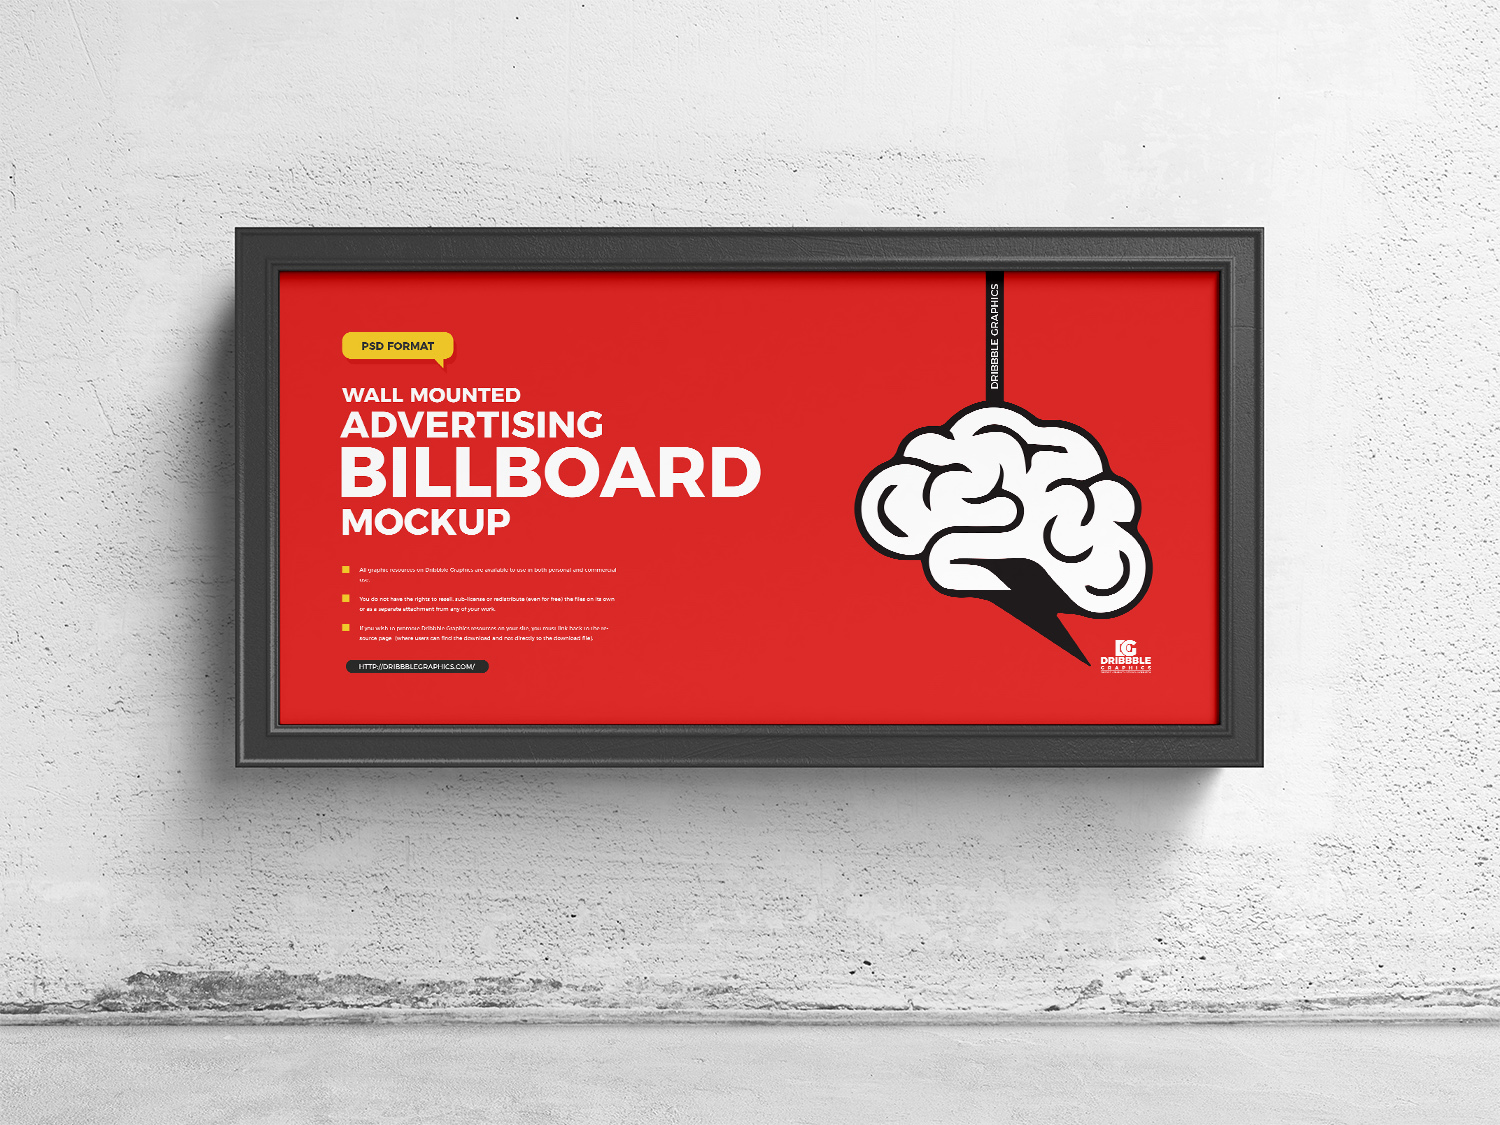 Wall Mounted Advertising Billboard Mockup